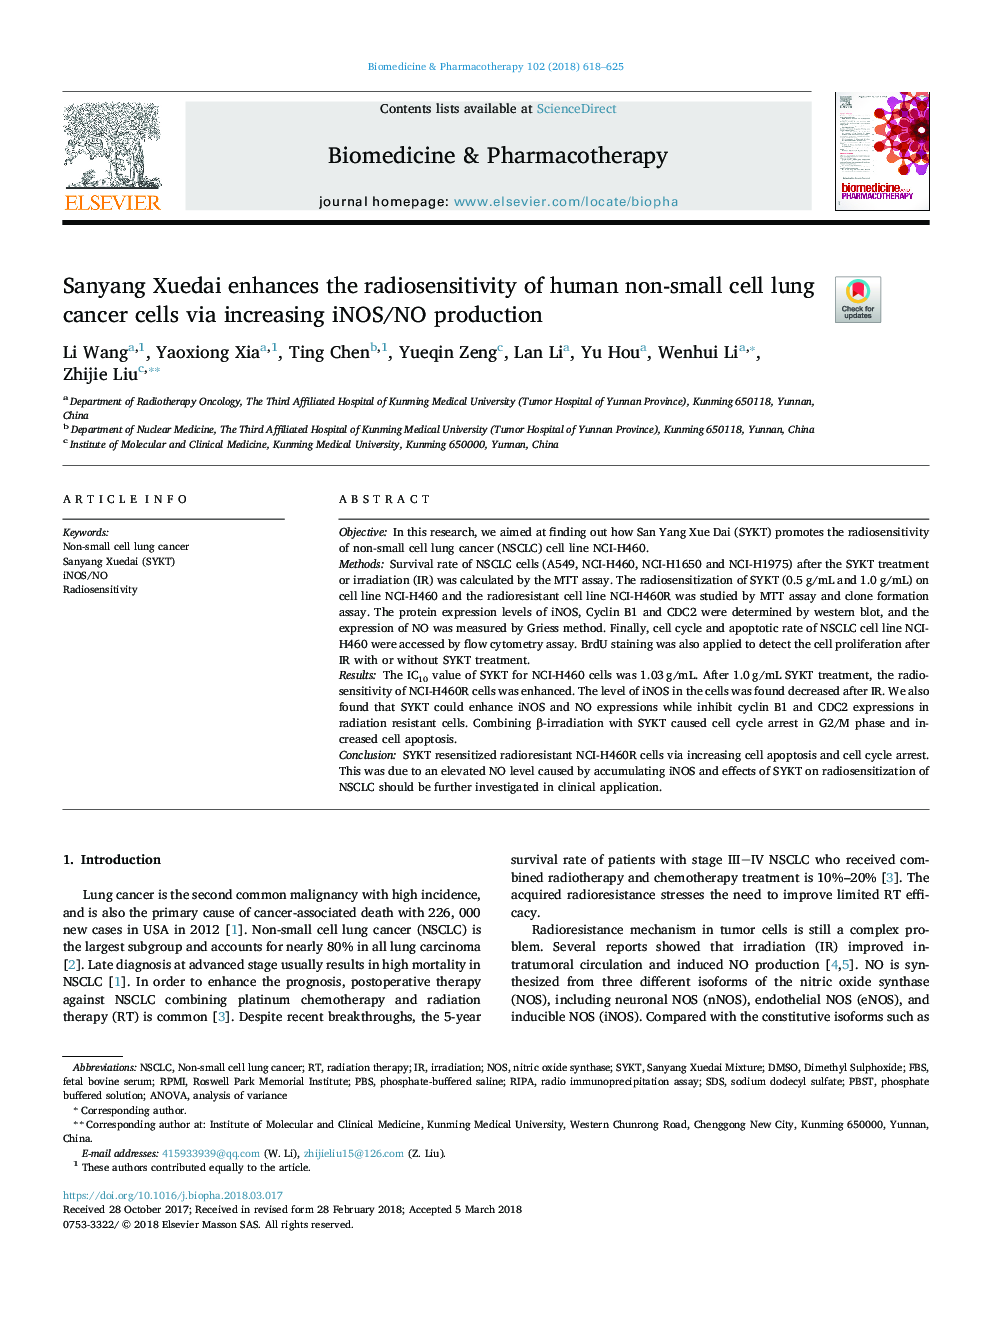 Sanyang Xuedai enhances the radiosensitivity of human non-small cell lung cancer cells via increasing iNOS/NO production